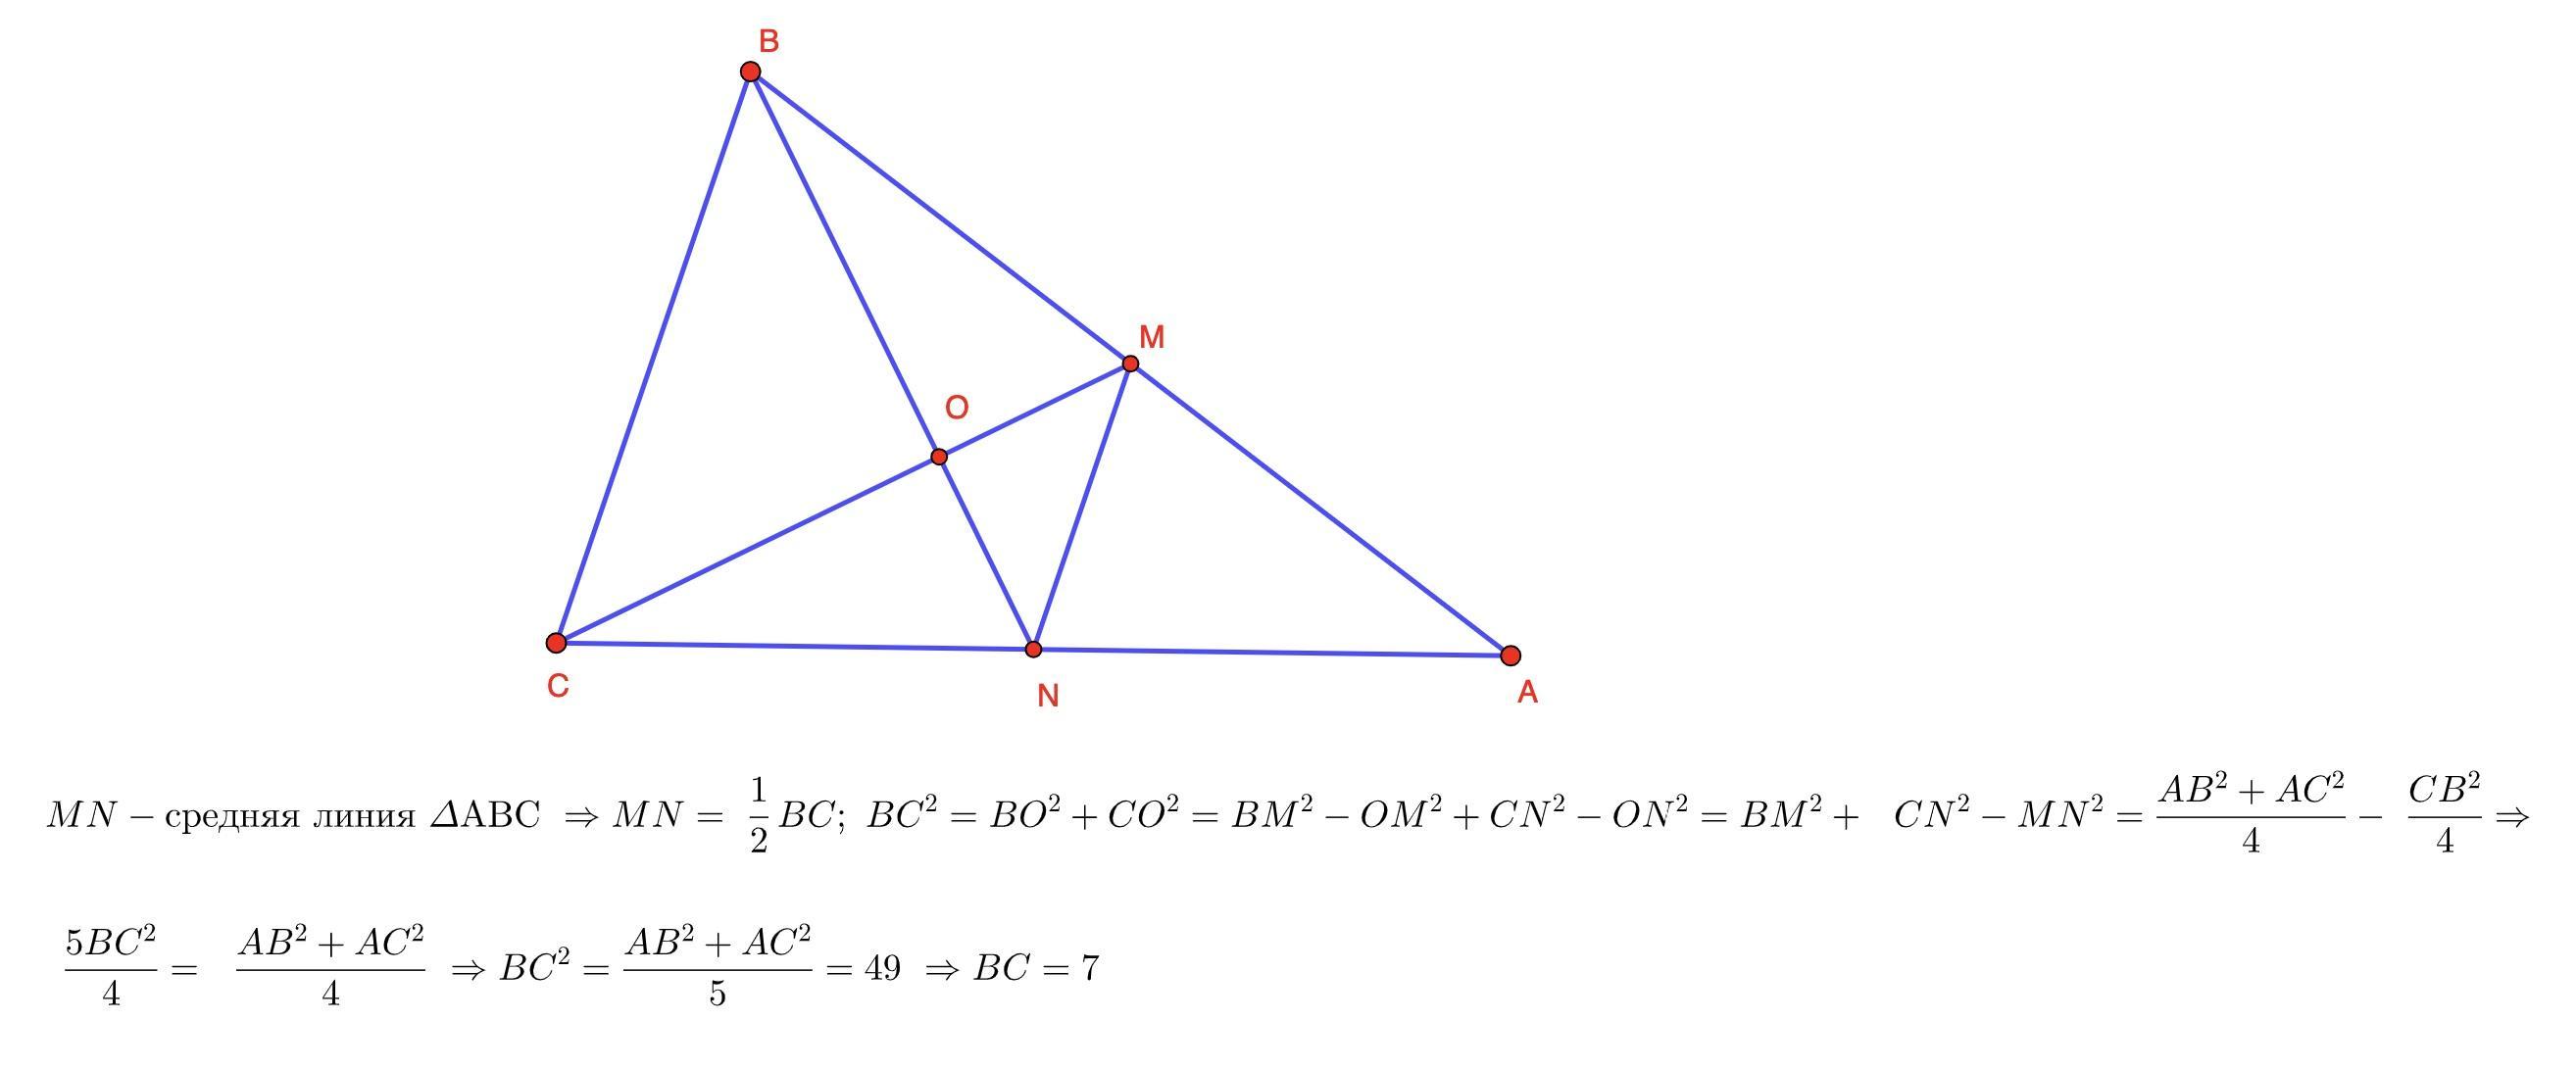 На стороне BC треугольника ABC выбрана точка d. Рисунок треугольника АВС С медианой ВМ. В треугольнике ABC BM Медиана и BH высота. BM перпендикулярно BC BM перпендикулярно ab. В равностороннем треугольнике abc провели медиану am